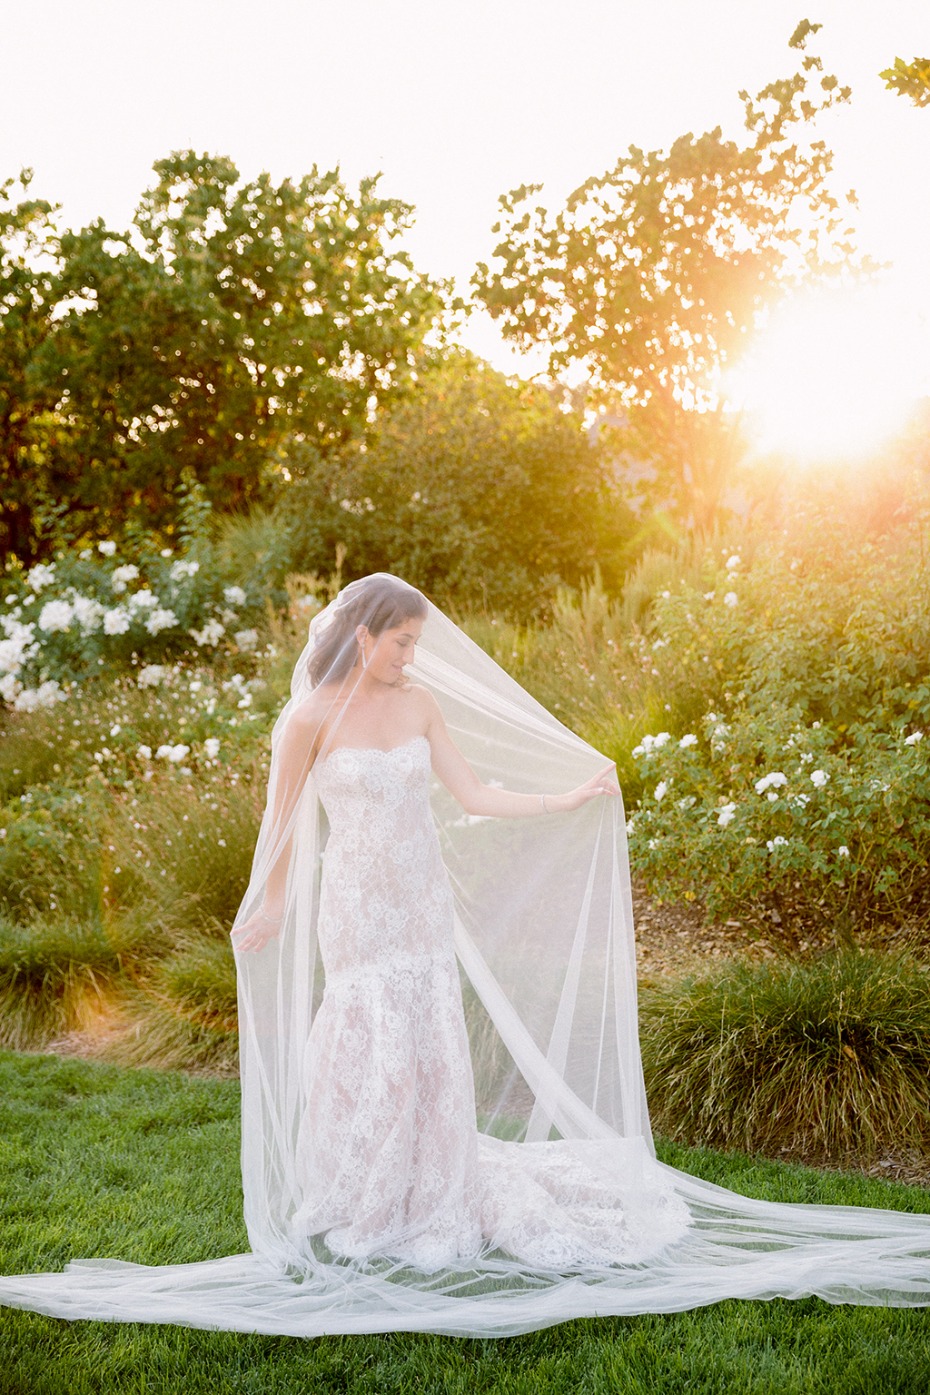 bridal photo ideas with your wedding veil